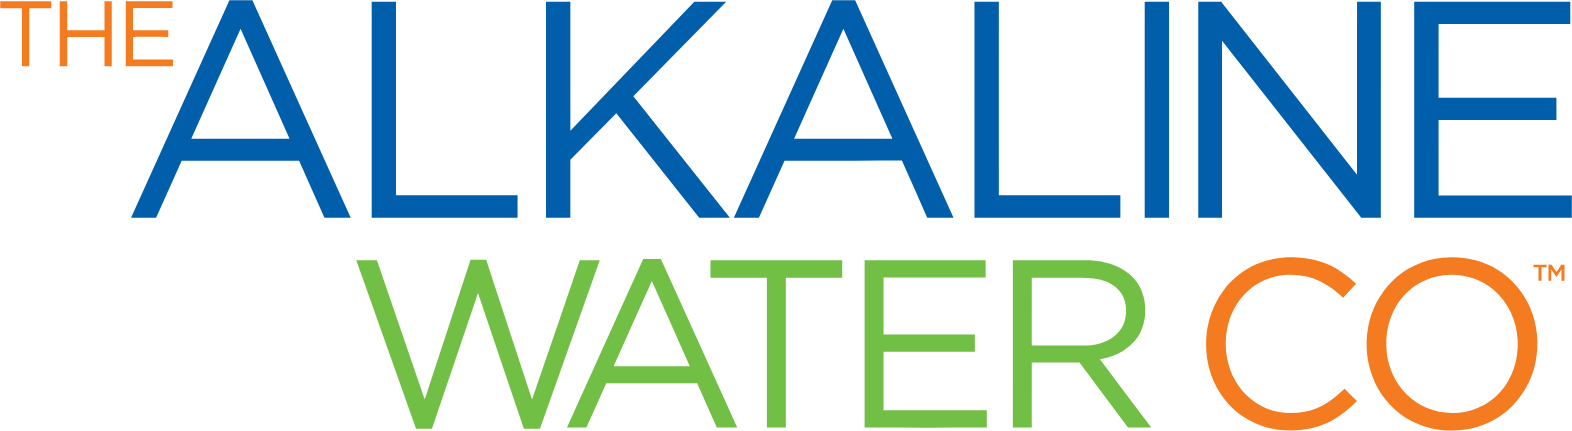 Alkaline Water Company logo large (transparent PNG)